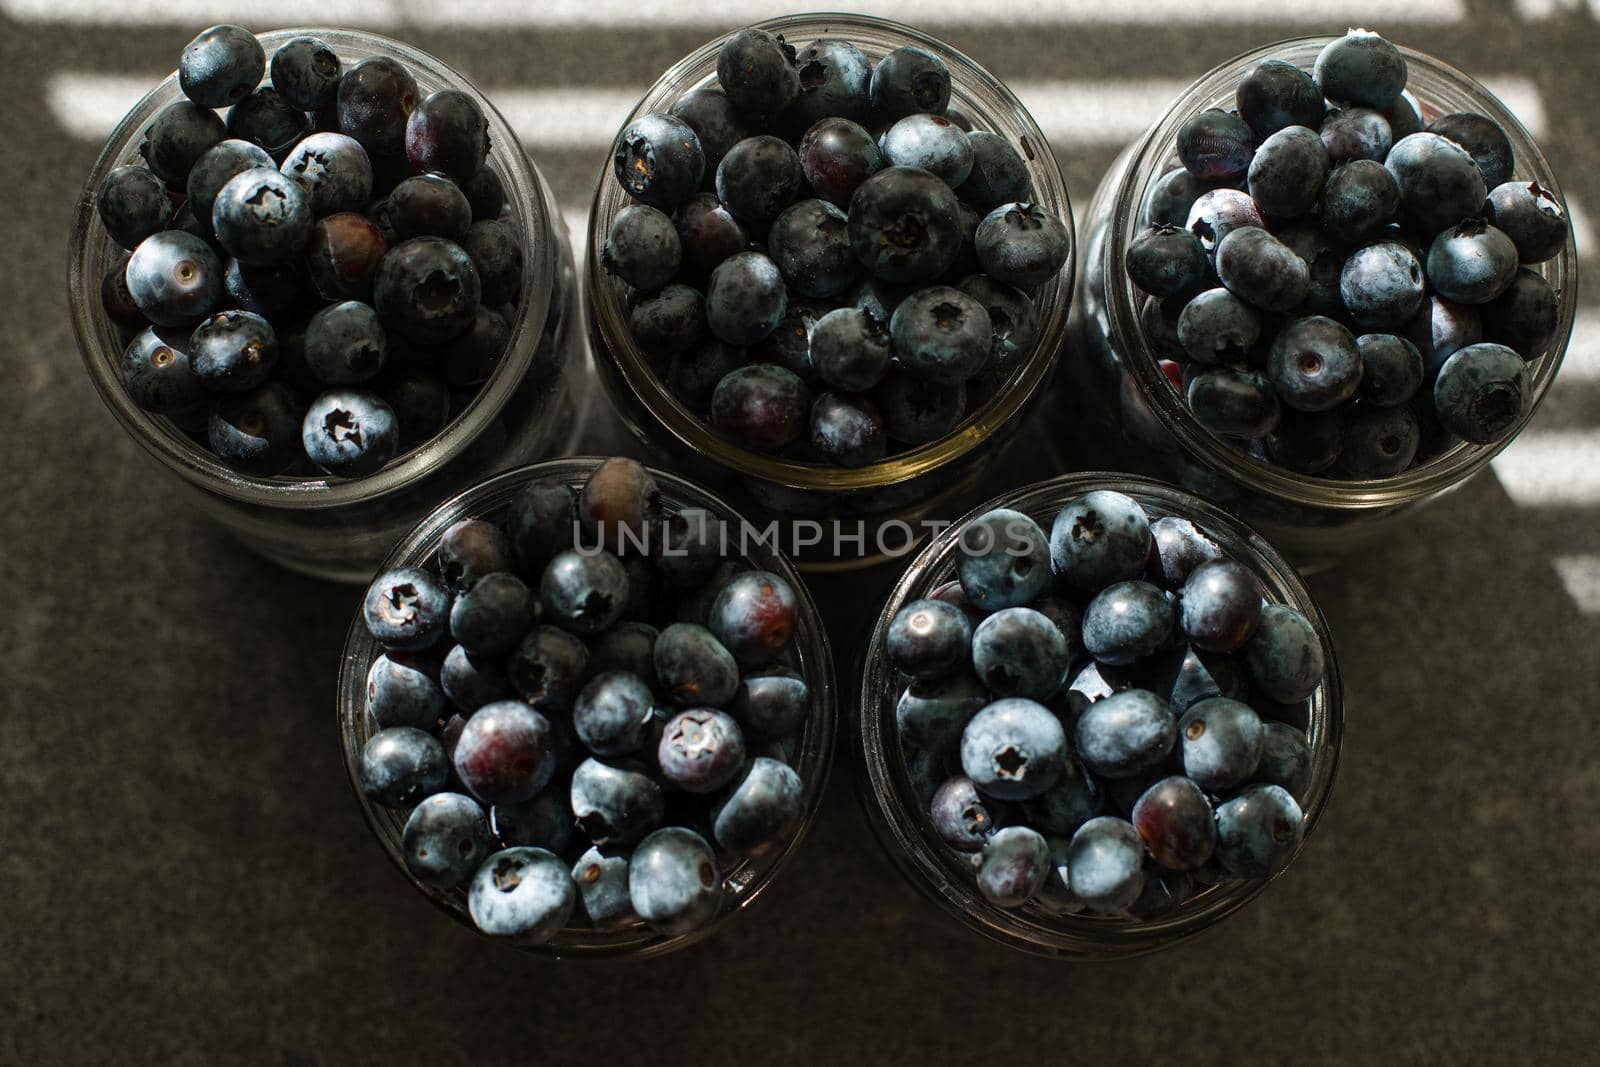 Many large beautiful juicy fresh blueberries lie in glass jars.